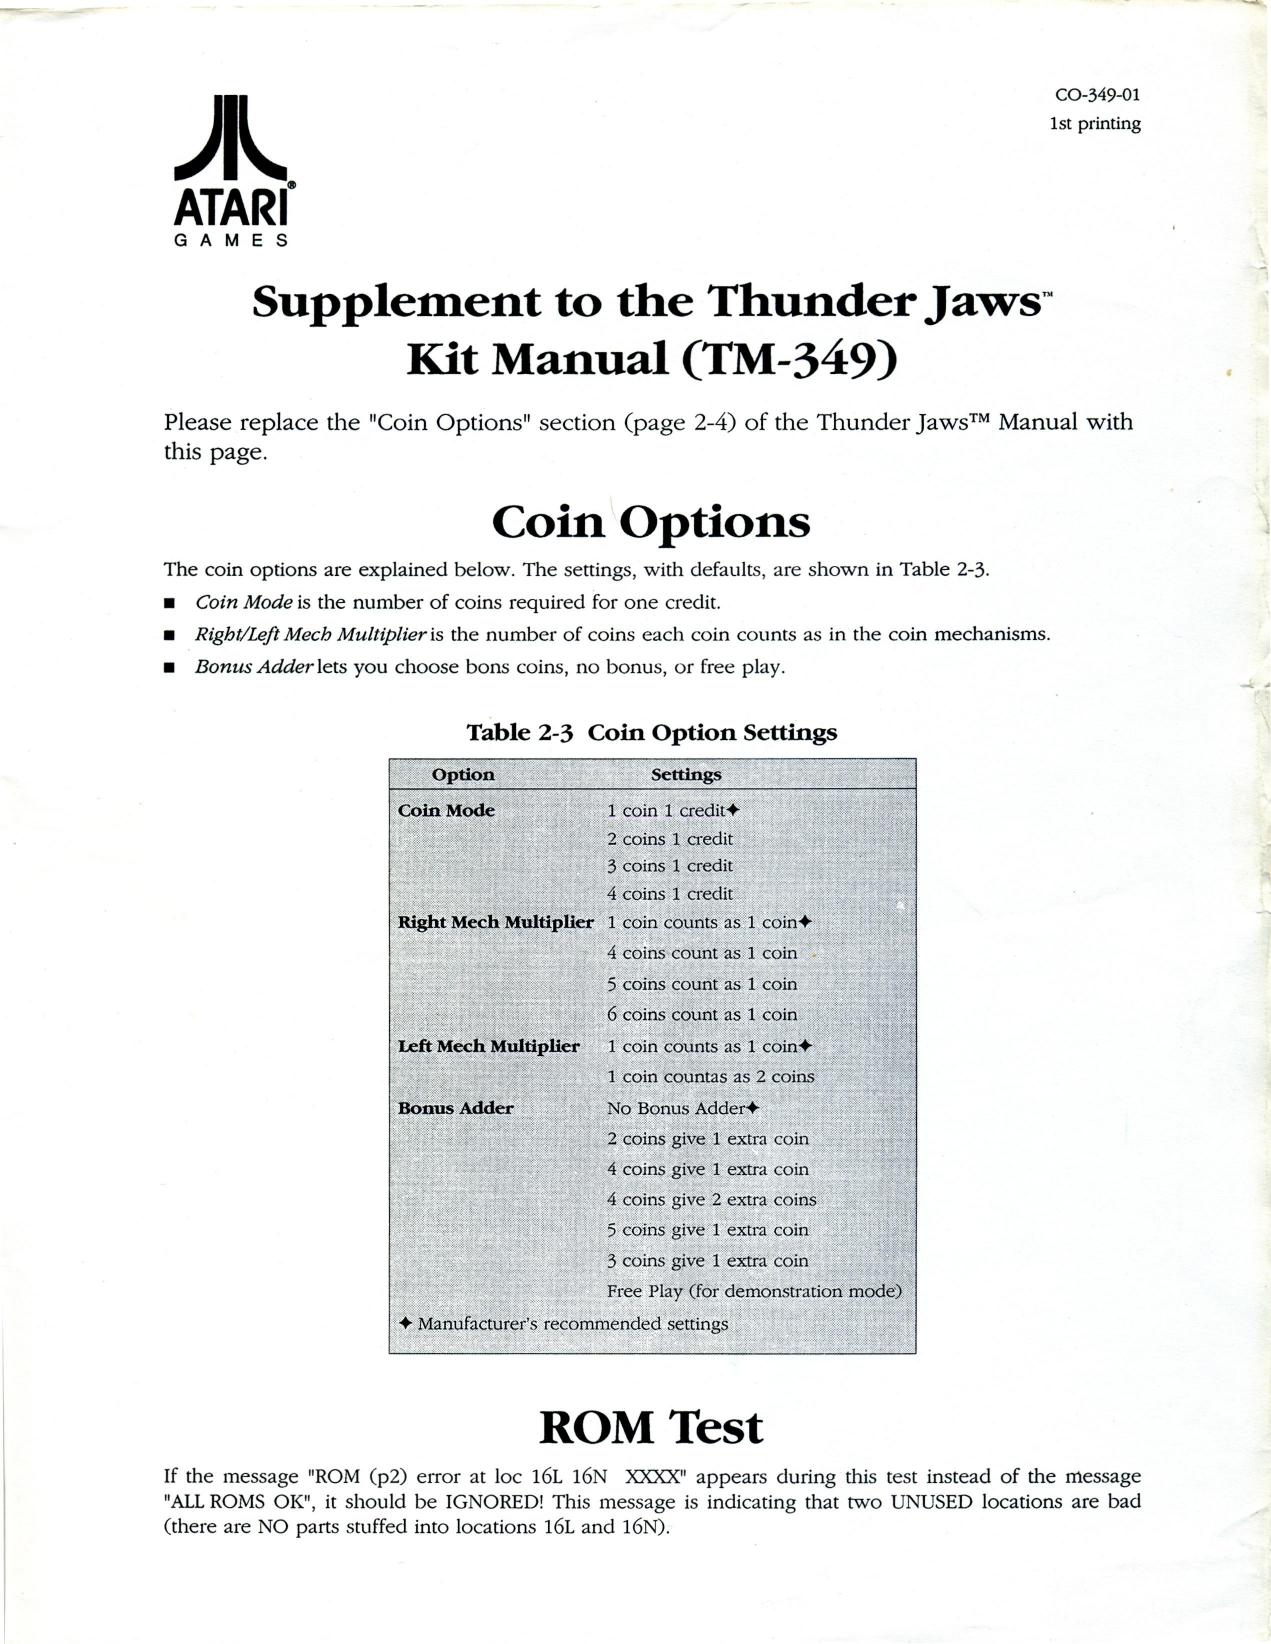 Thunder Jaws CO-349-01 1st Printing